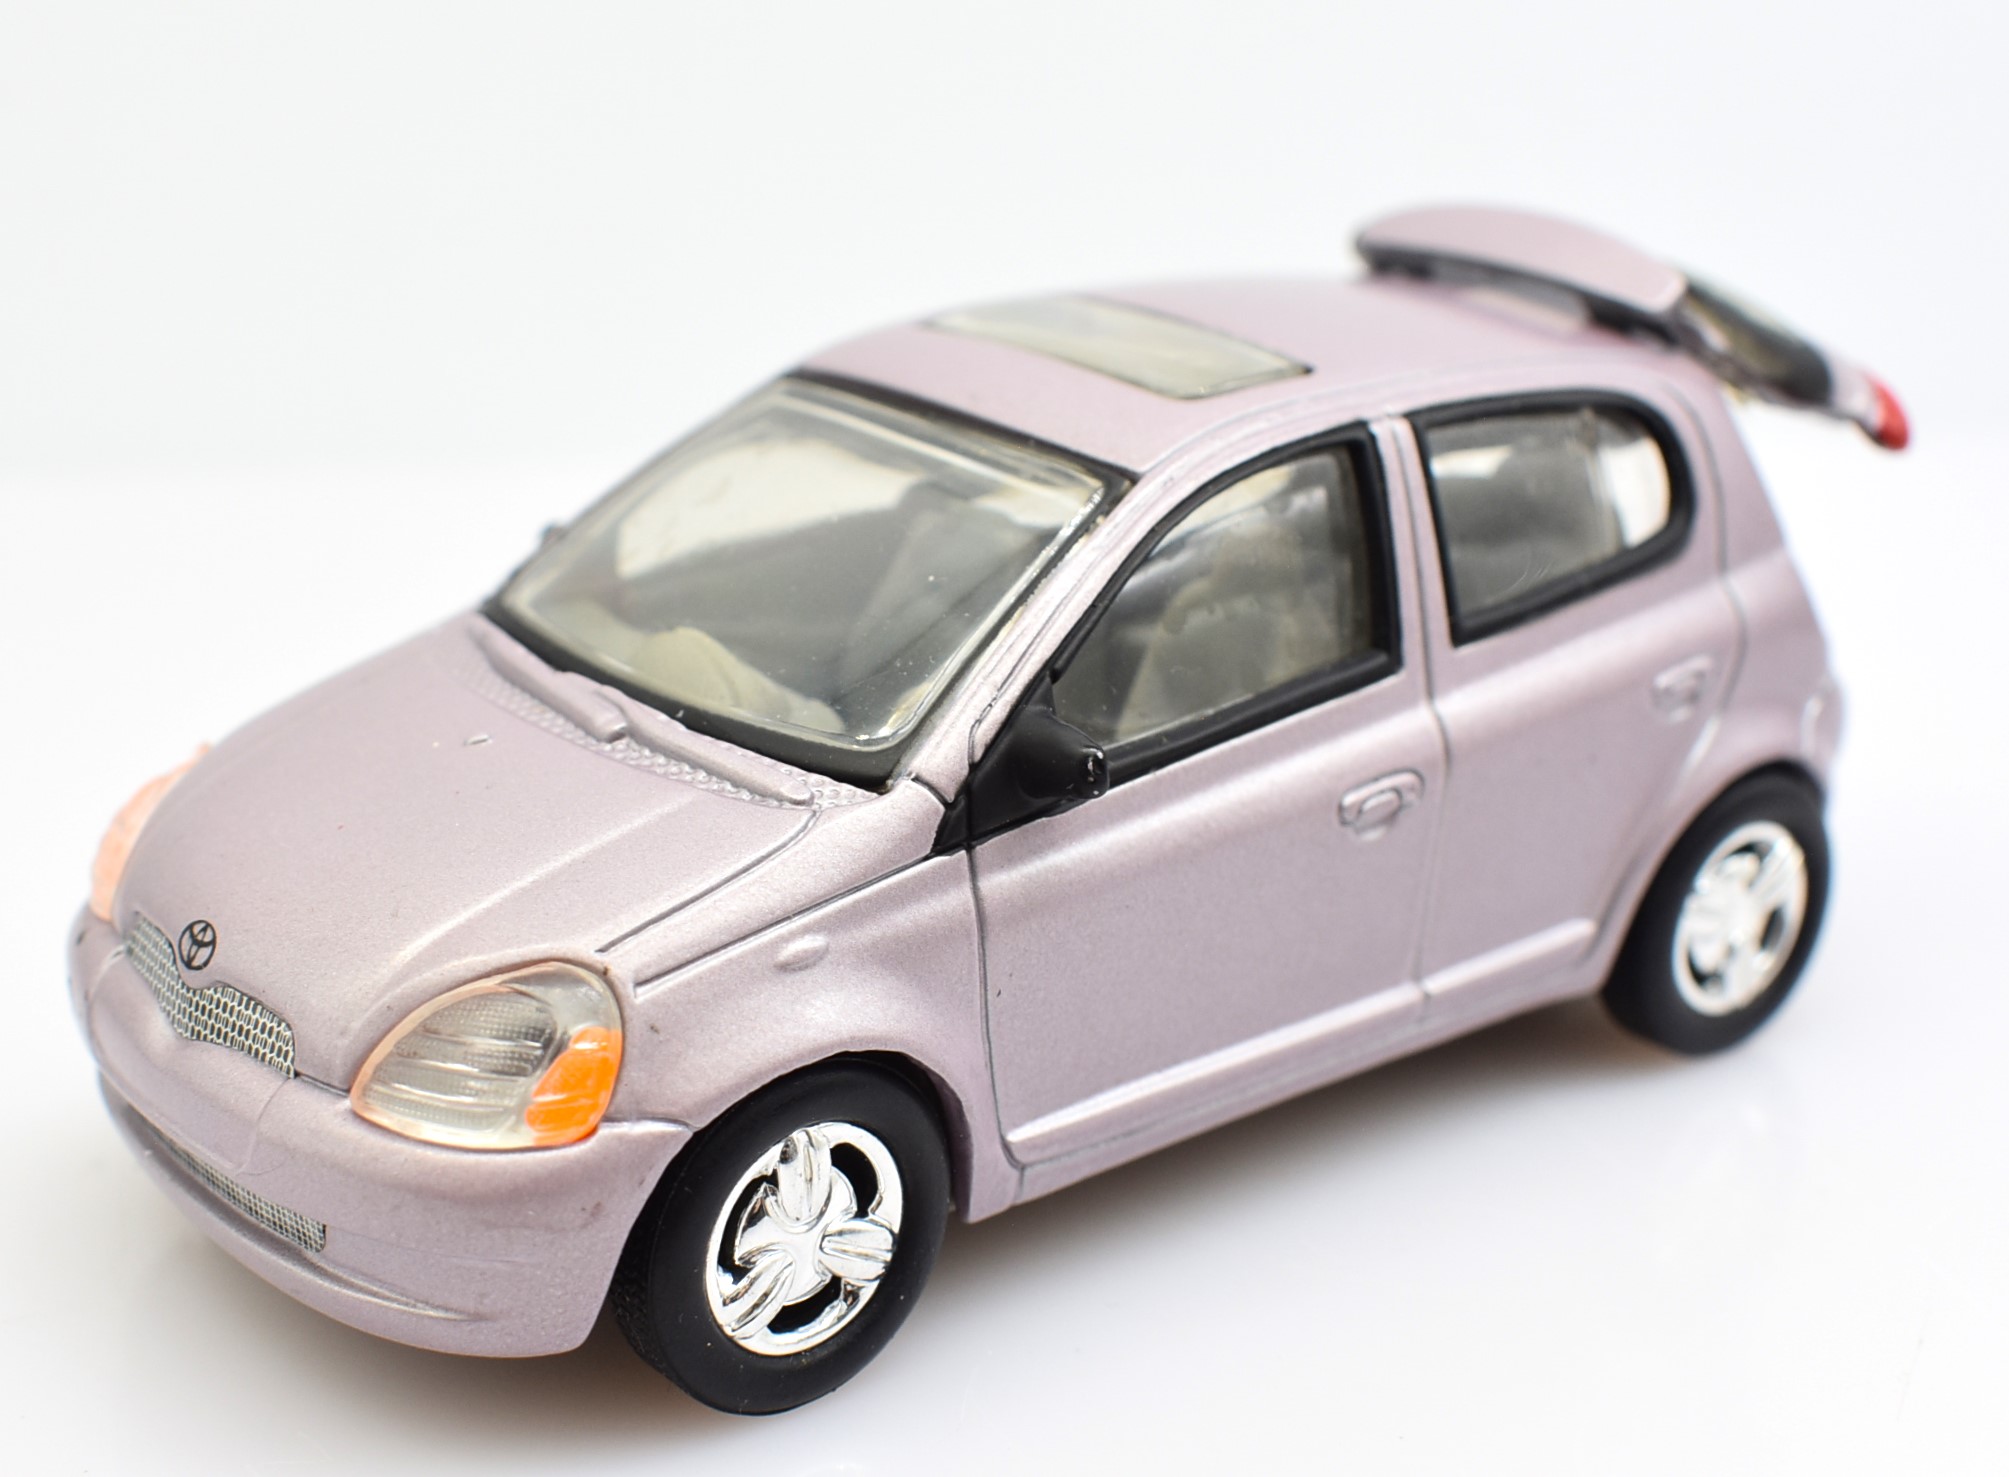 Modellino auto scala 1:36 Toyota Yaris Vitz Echo Tins Toys diecast modellismo